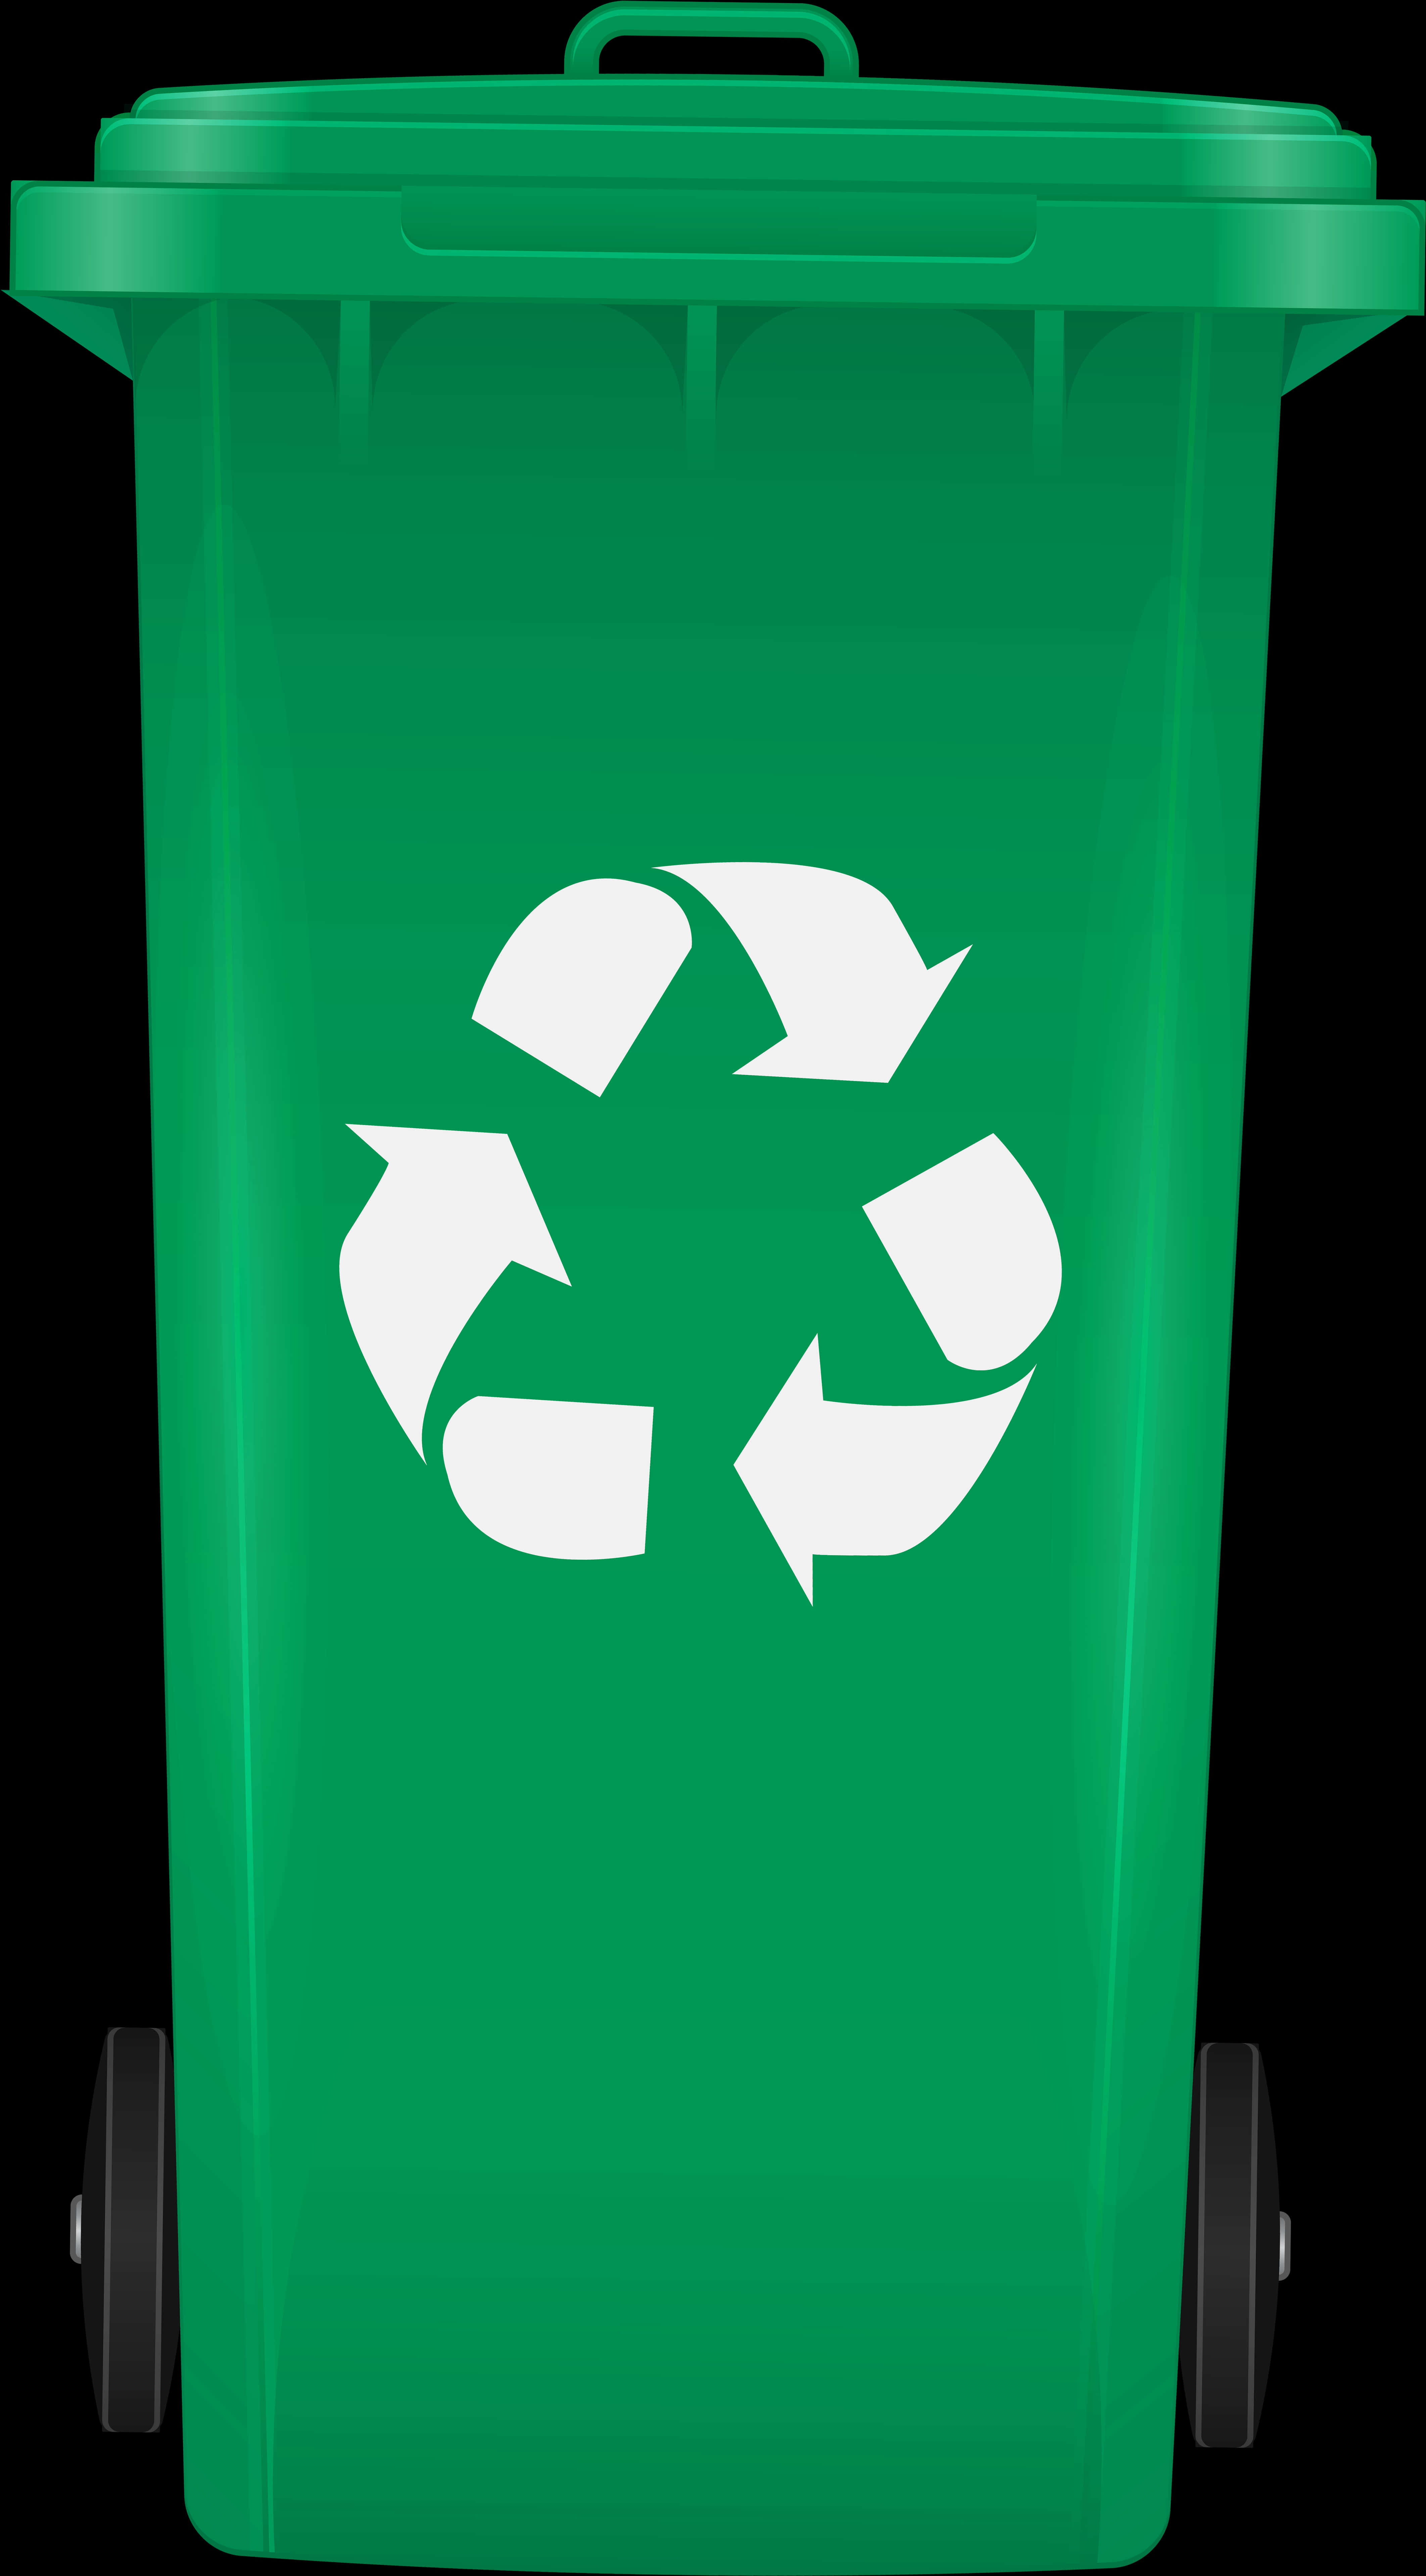 Green Recycling Bin Icon PNG